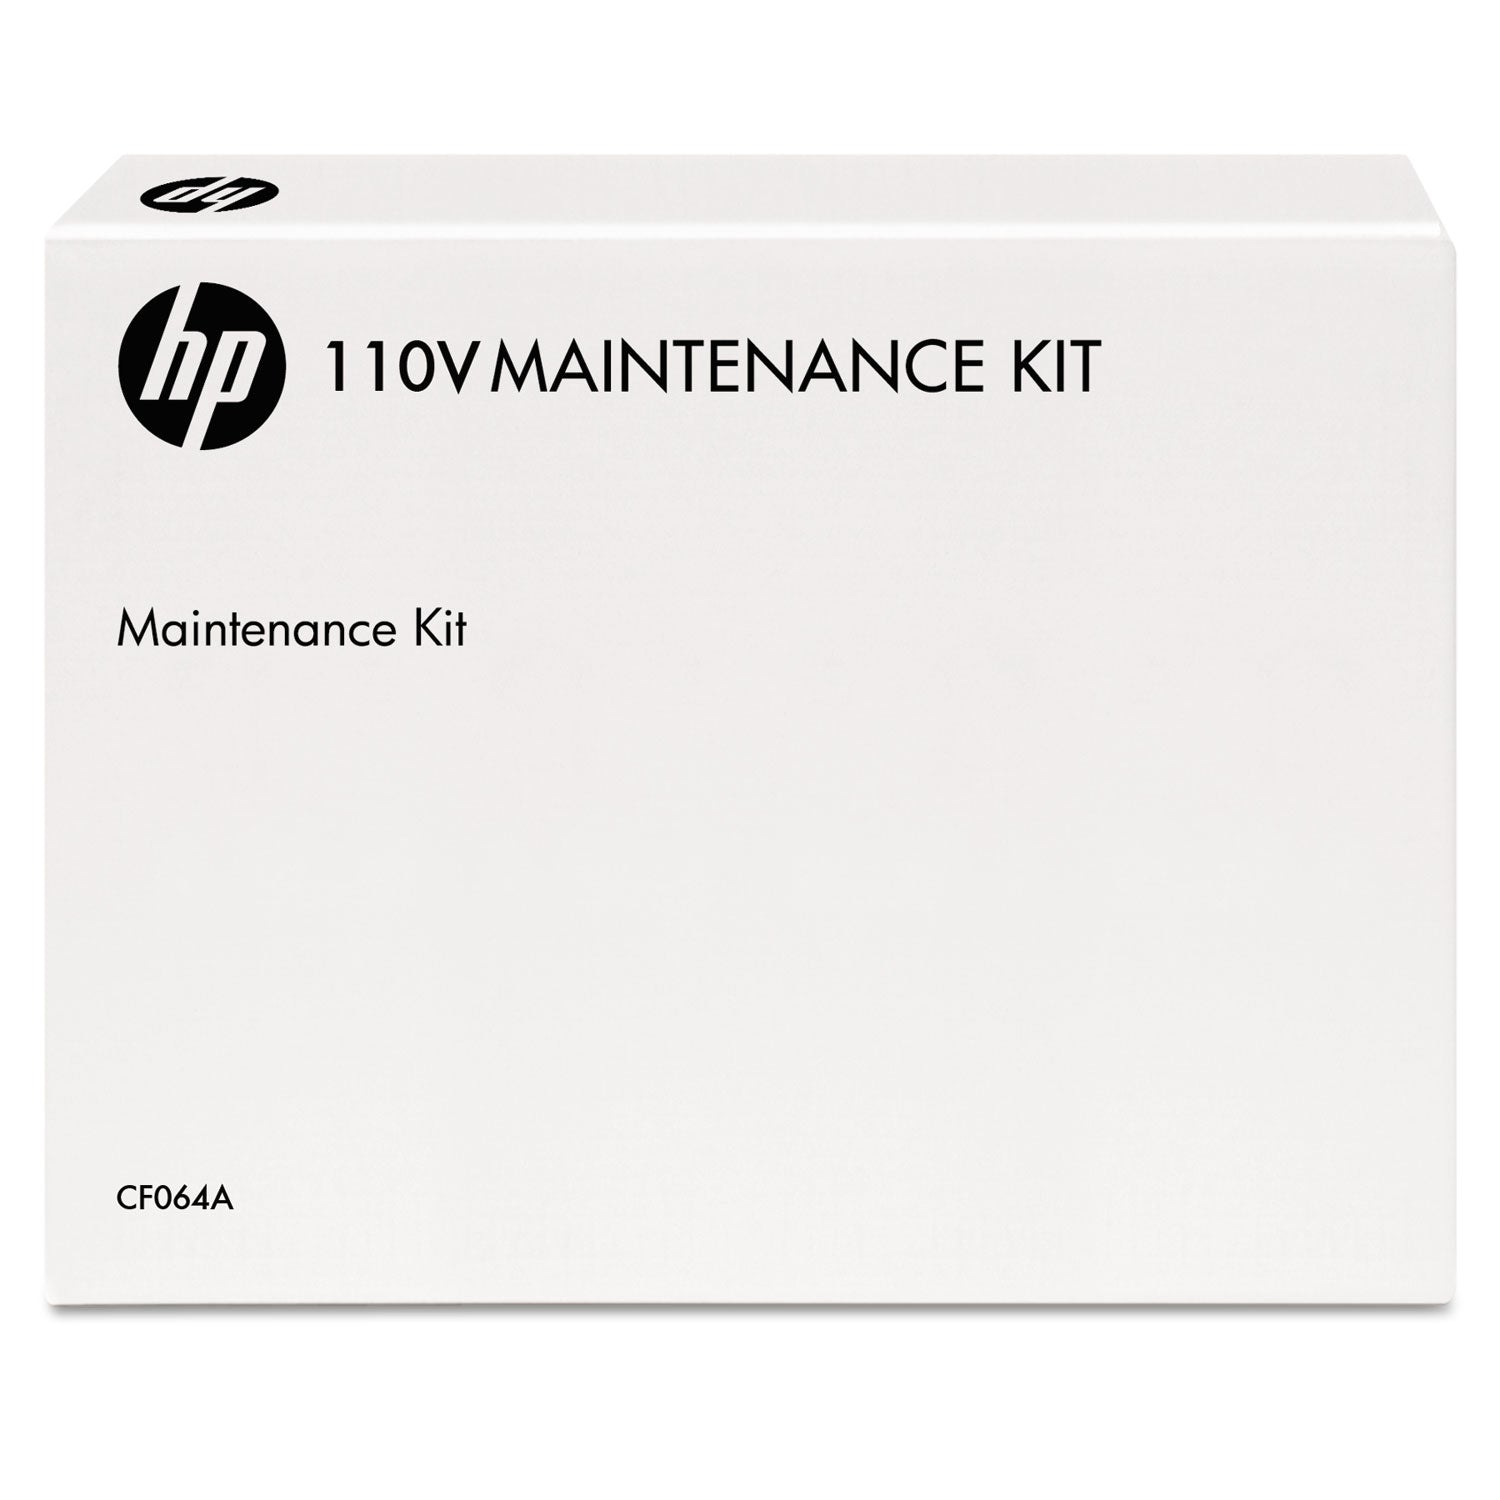 cf064a-110v-maintenance-kit_hewcf064a - 1